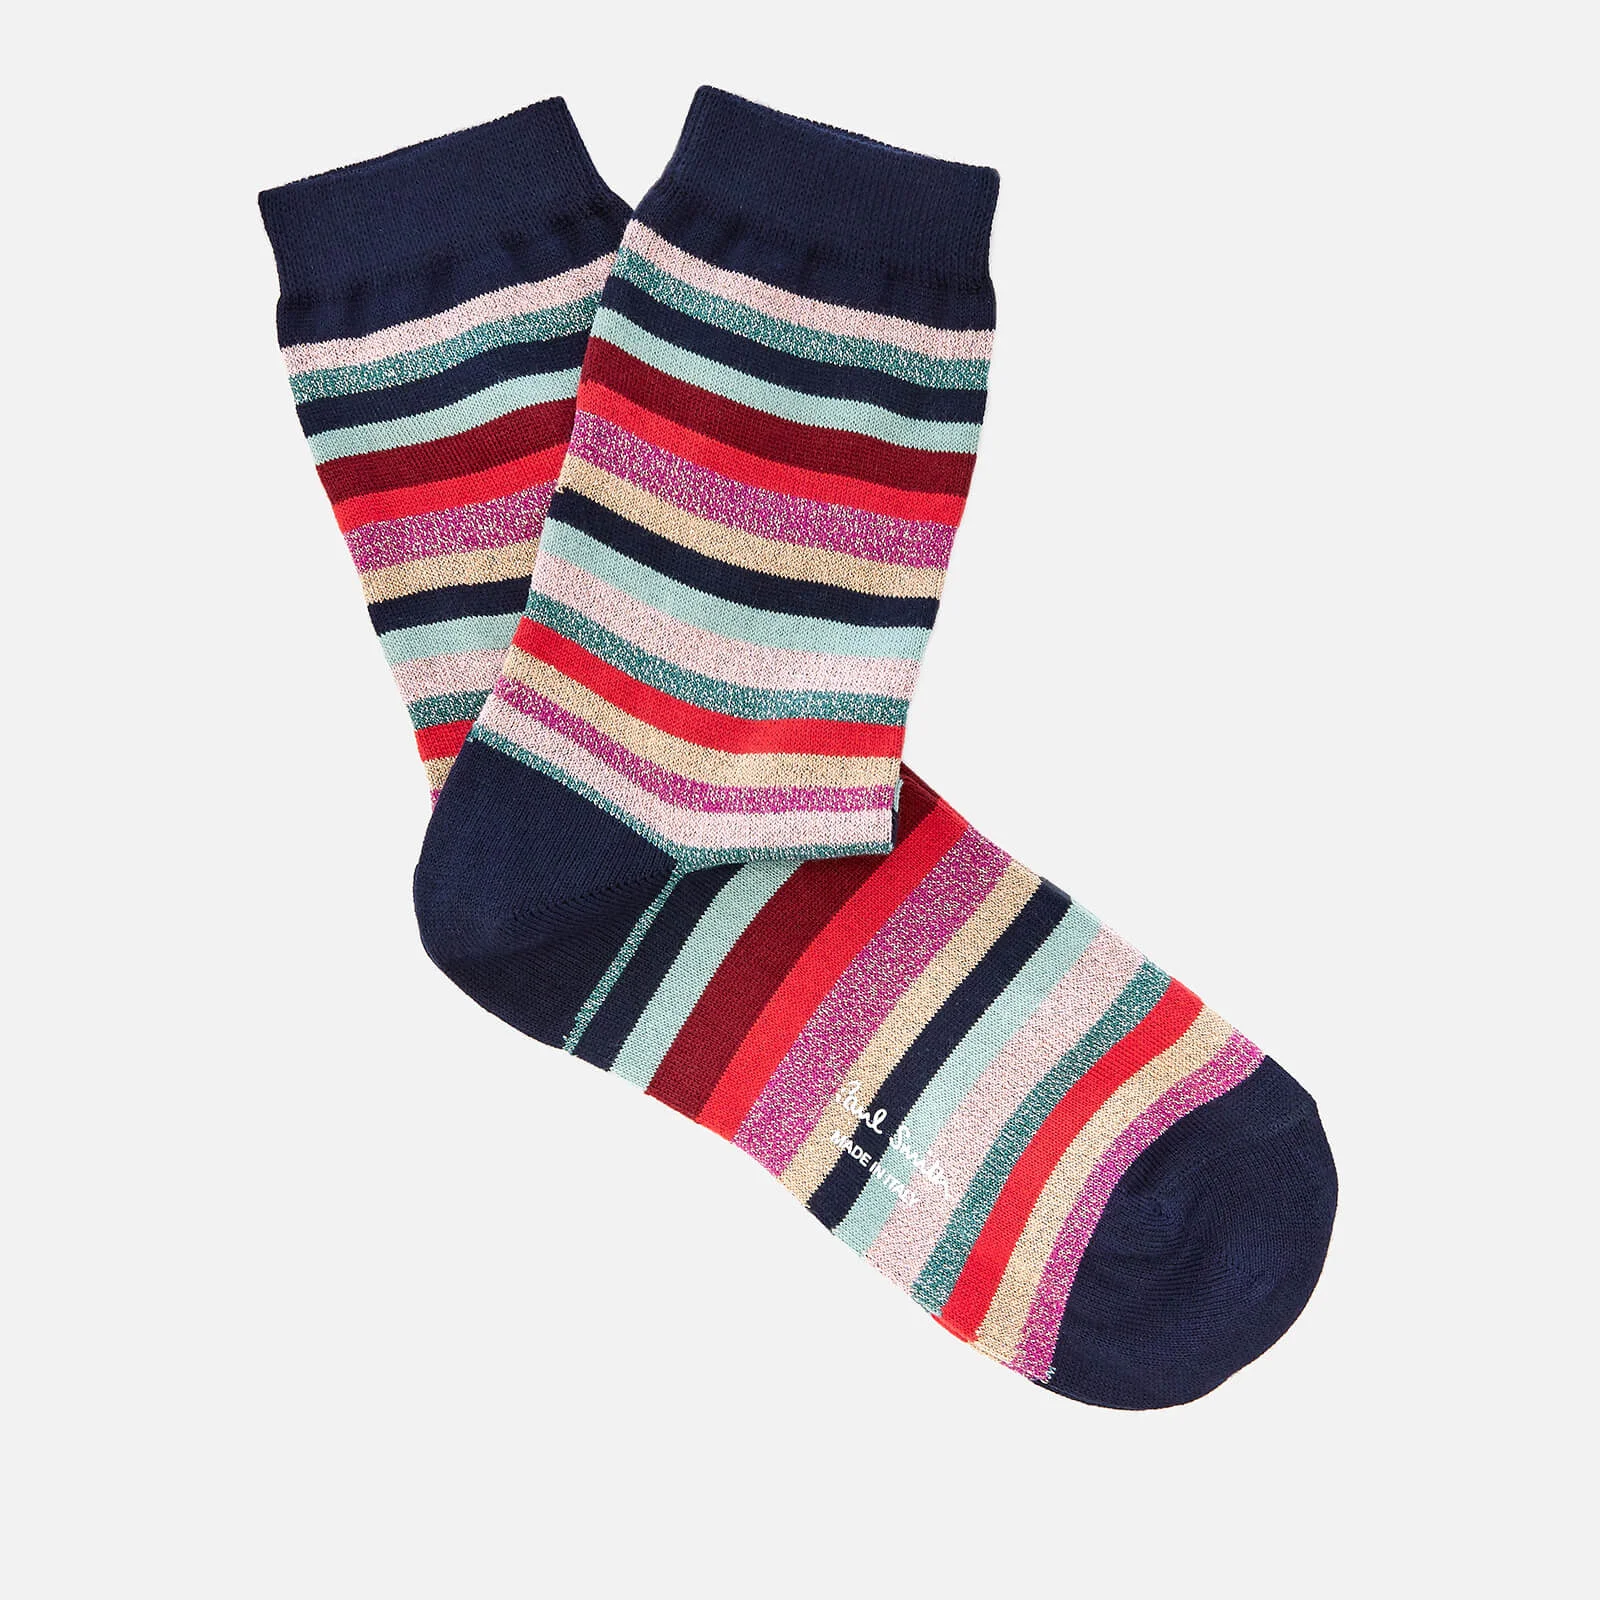 Paul Smith Women's Lurex Stripe Clarissa Socks - Multi Image 1